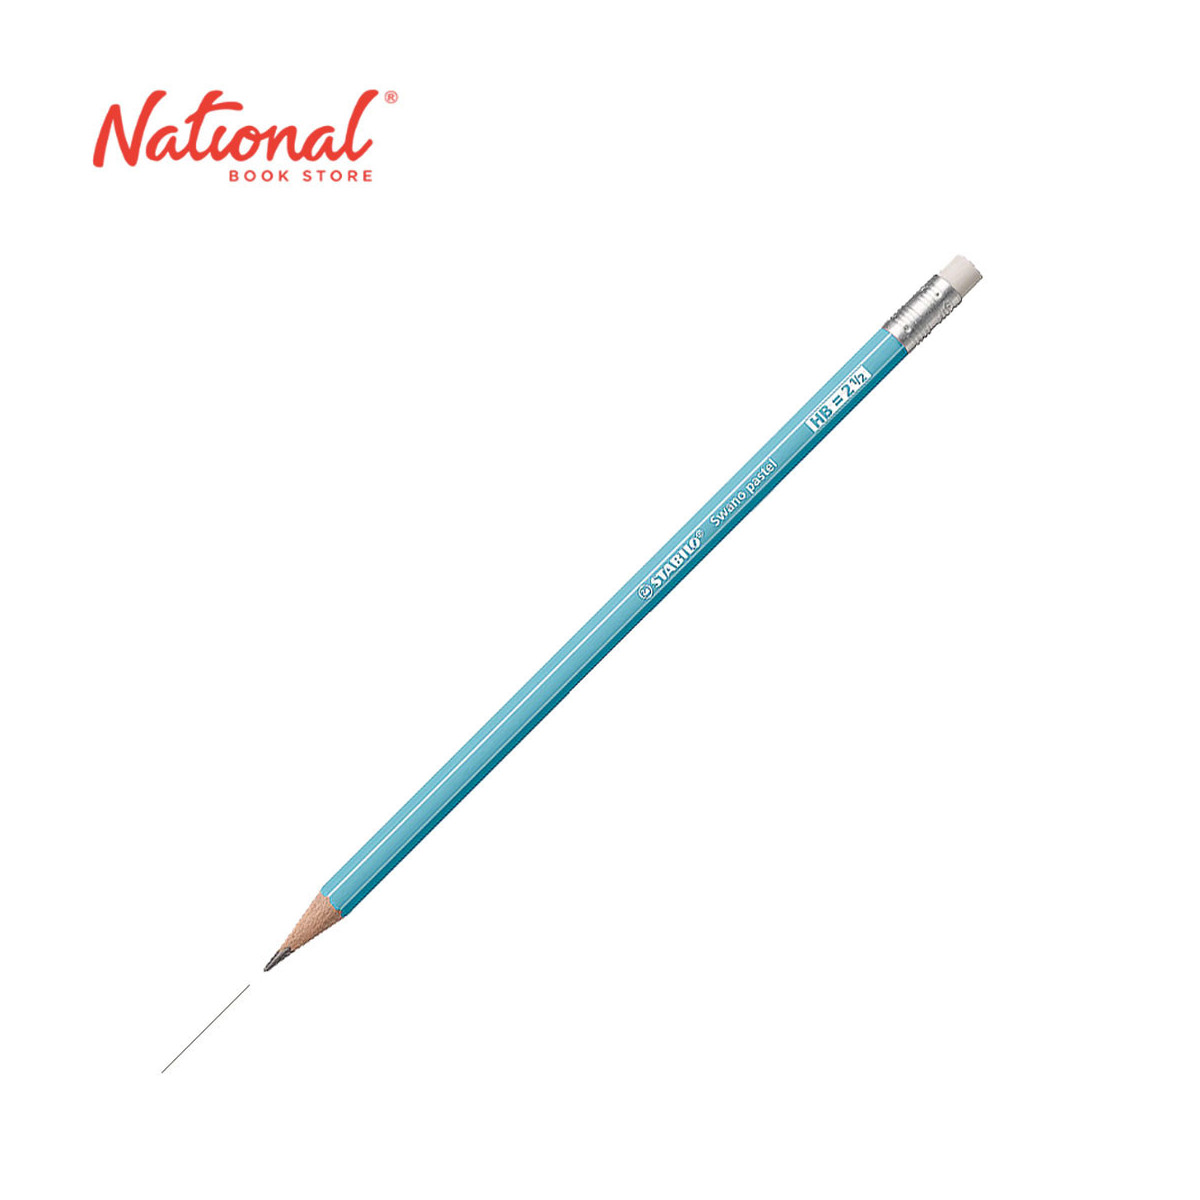 Stabilo Swano Pastel Wooden Pencil HB Blue 4908/06-HB - School Supplies